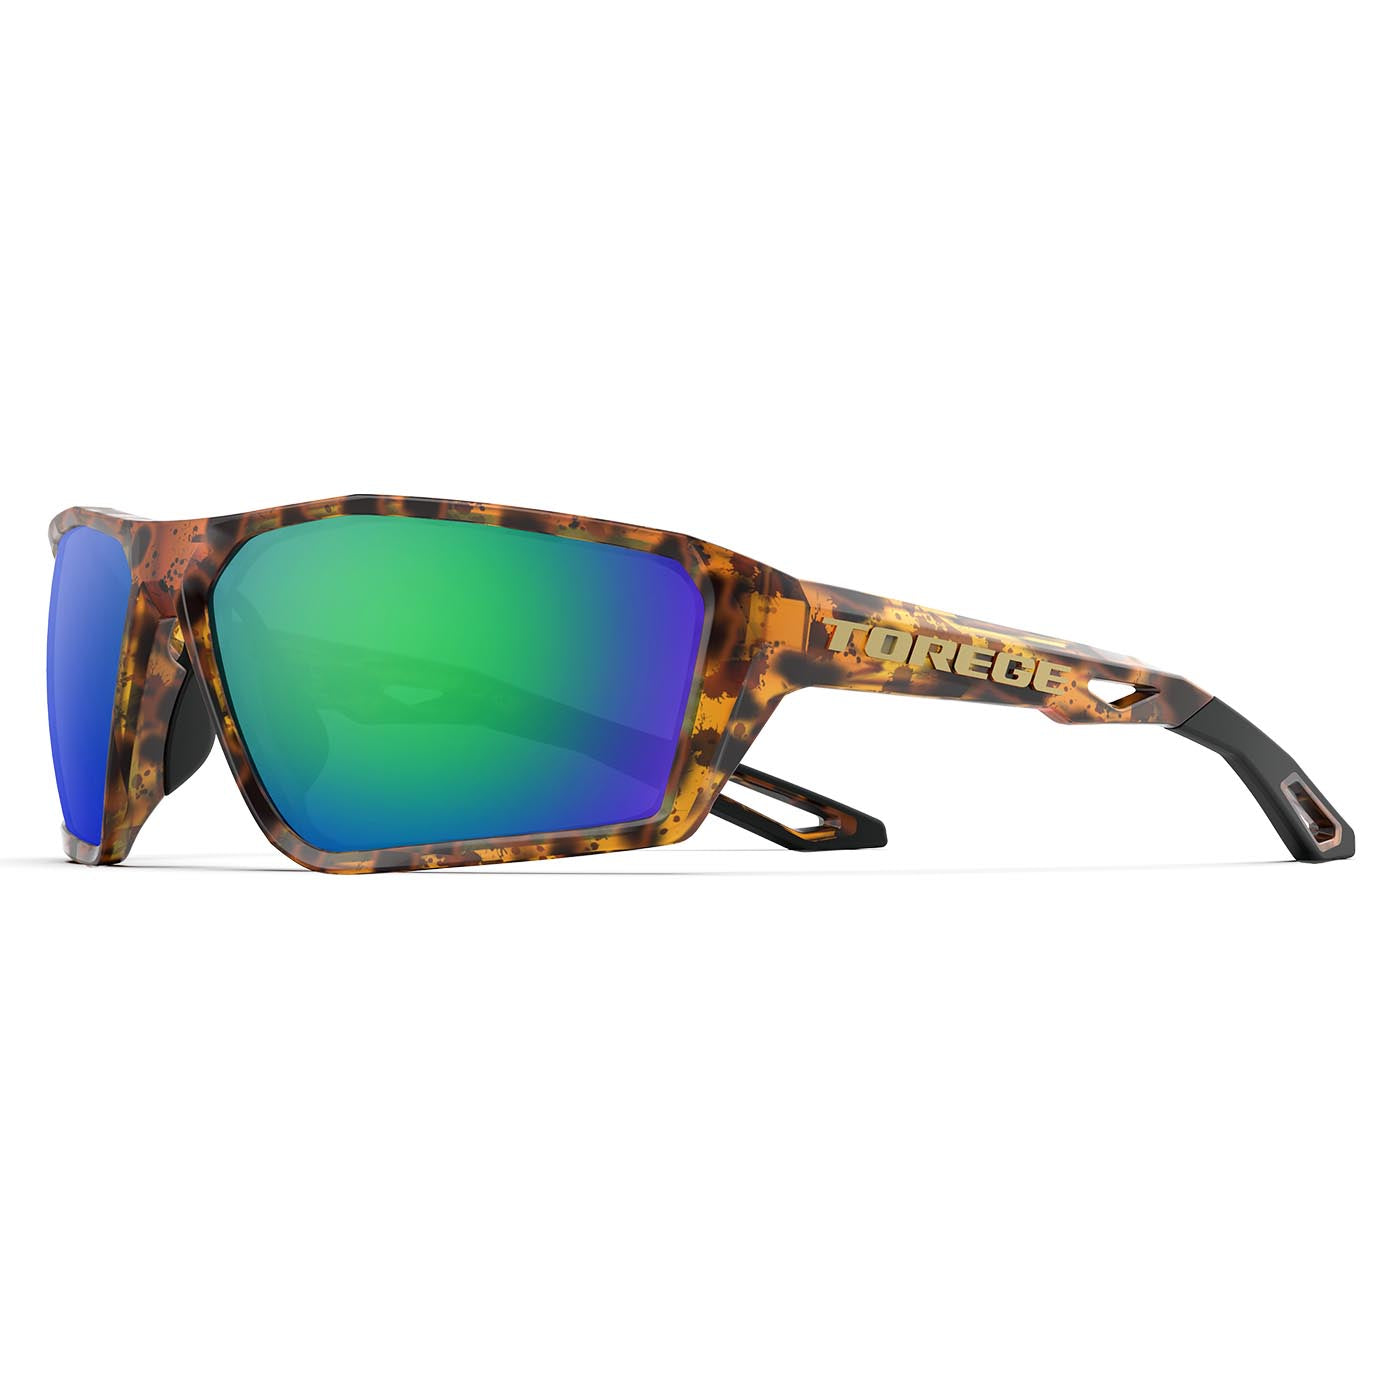 Torege Sports Polarized unisex Sunglasses for Fishing Cycling Running Golfing Sunglasses Durable Lens, Adult Unisex, Size: One size, Green